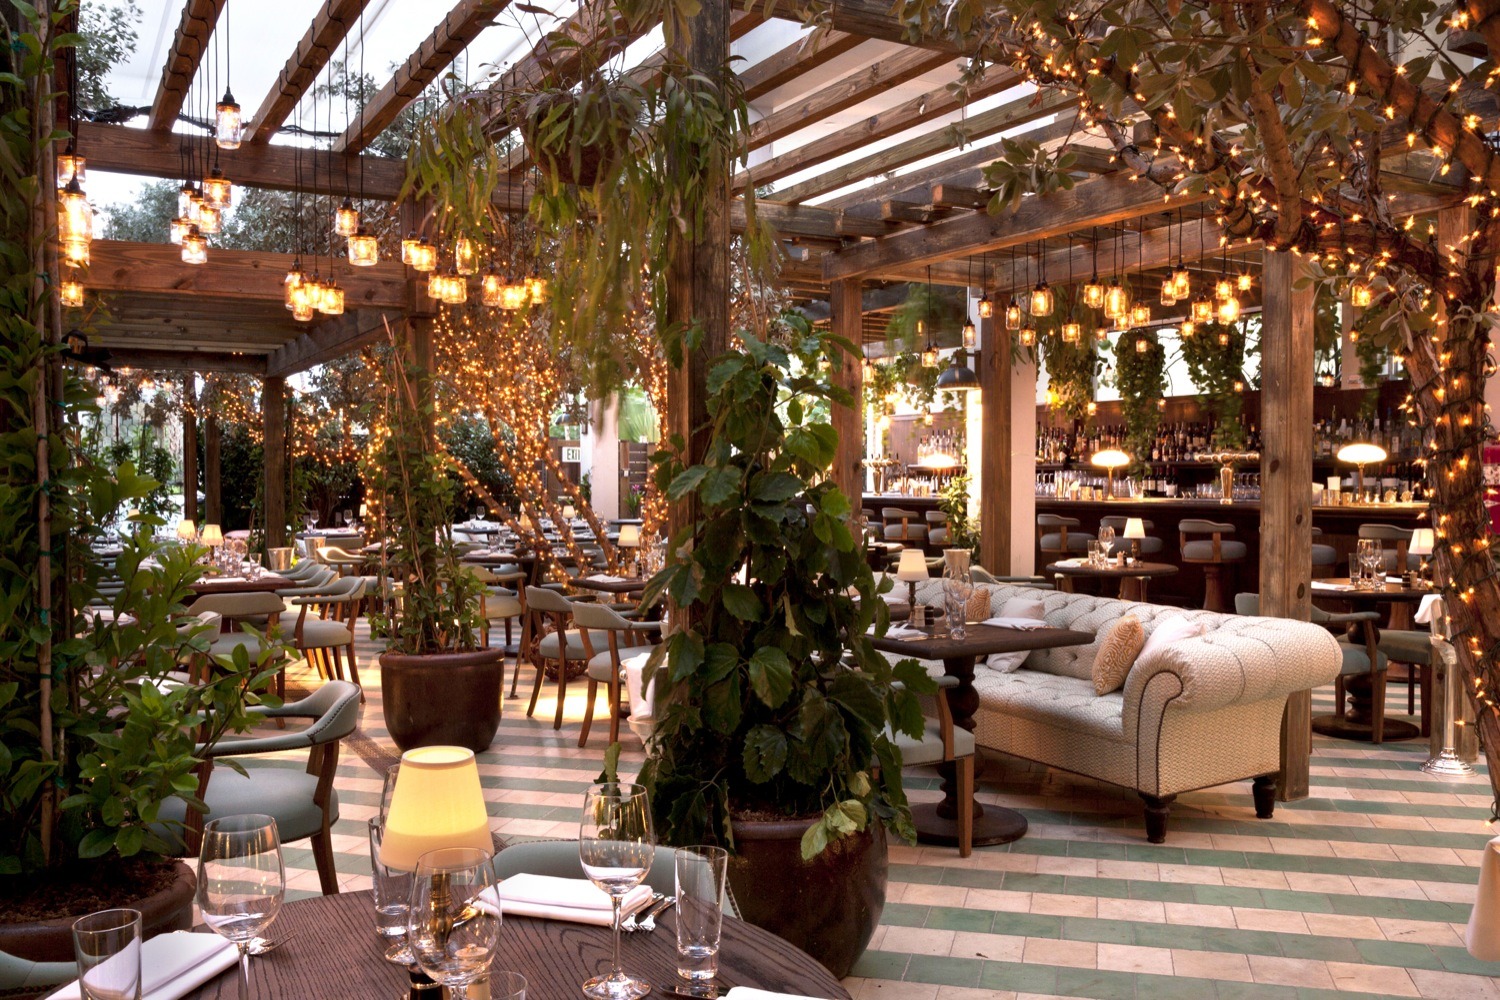 10 Best Italian Restaurants Miami Has to Offer